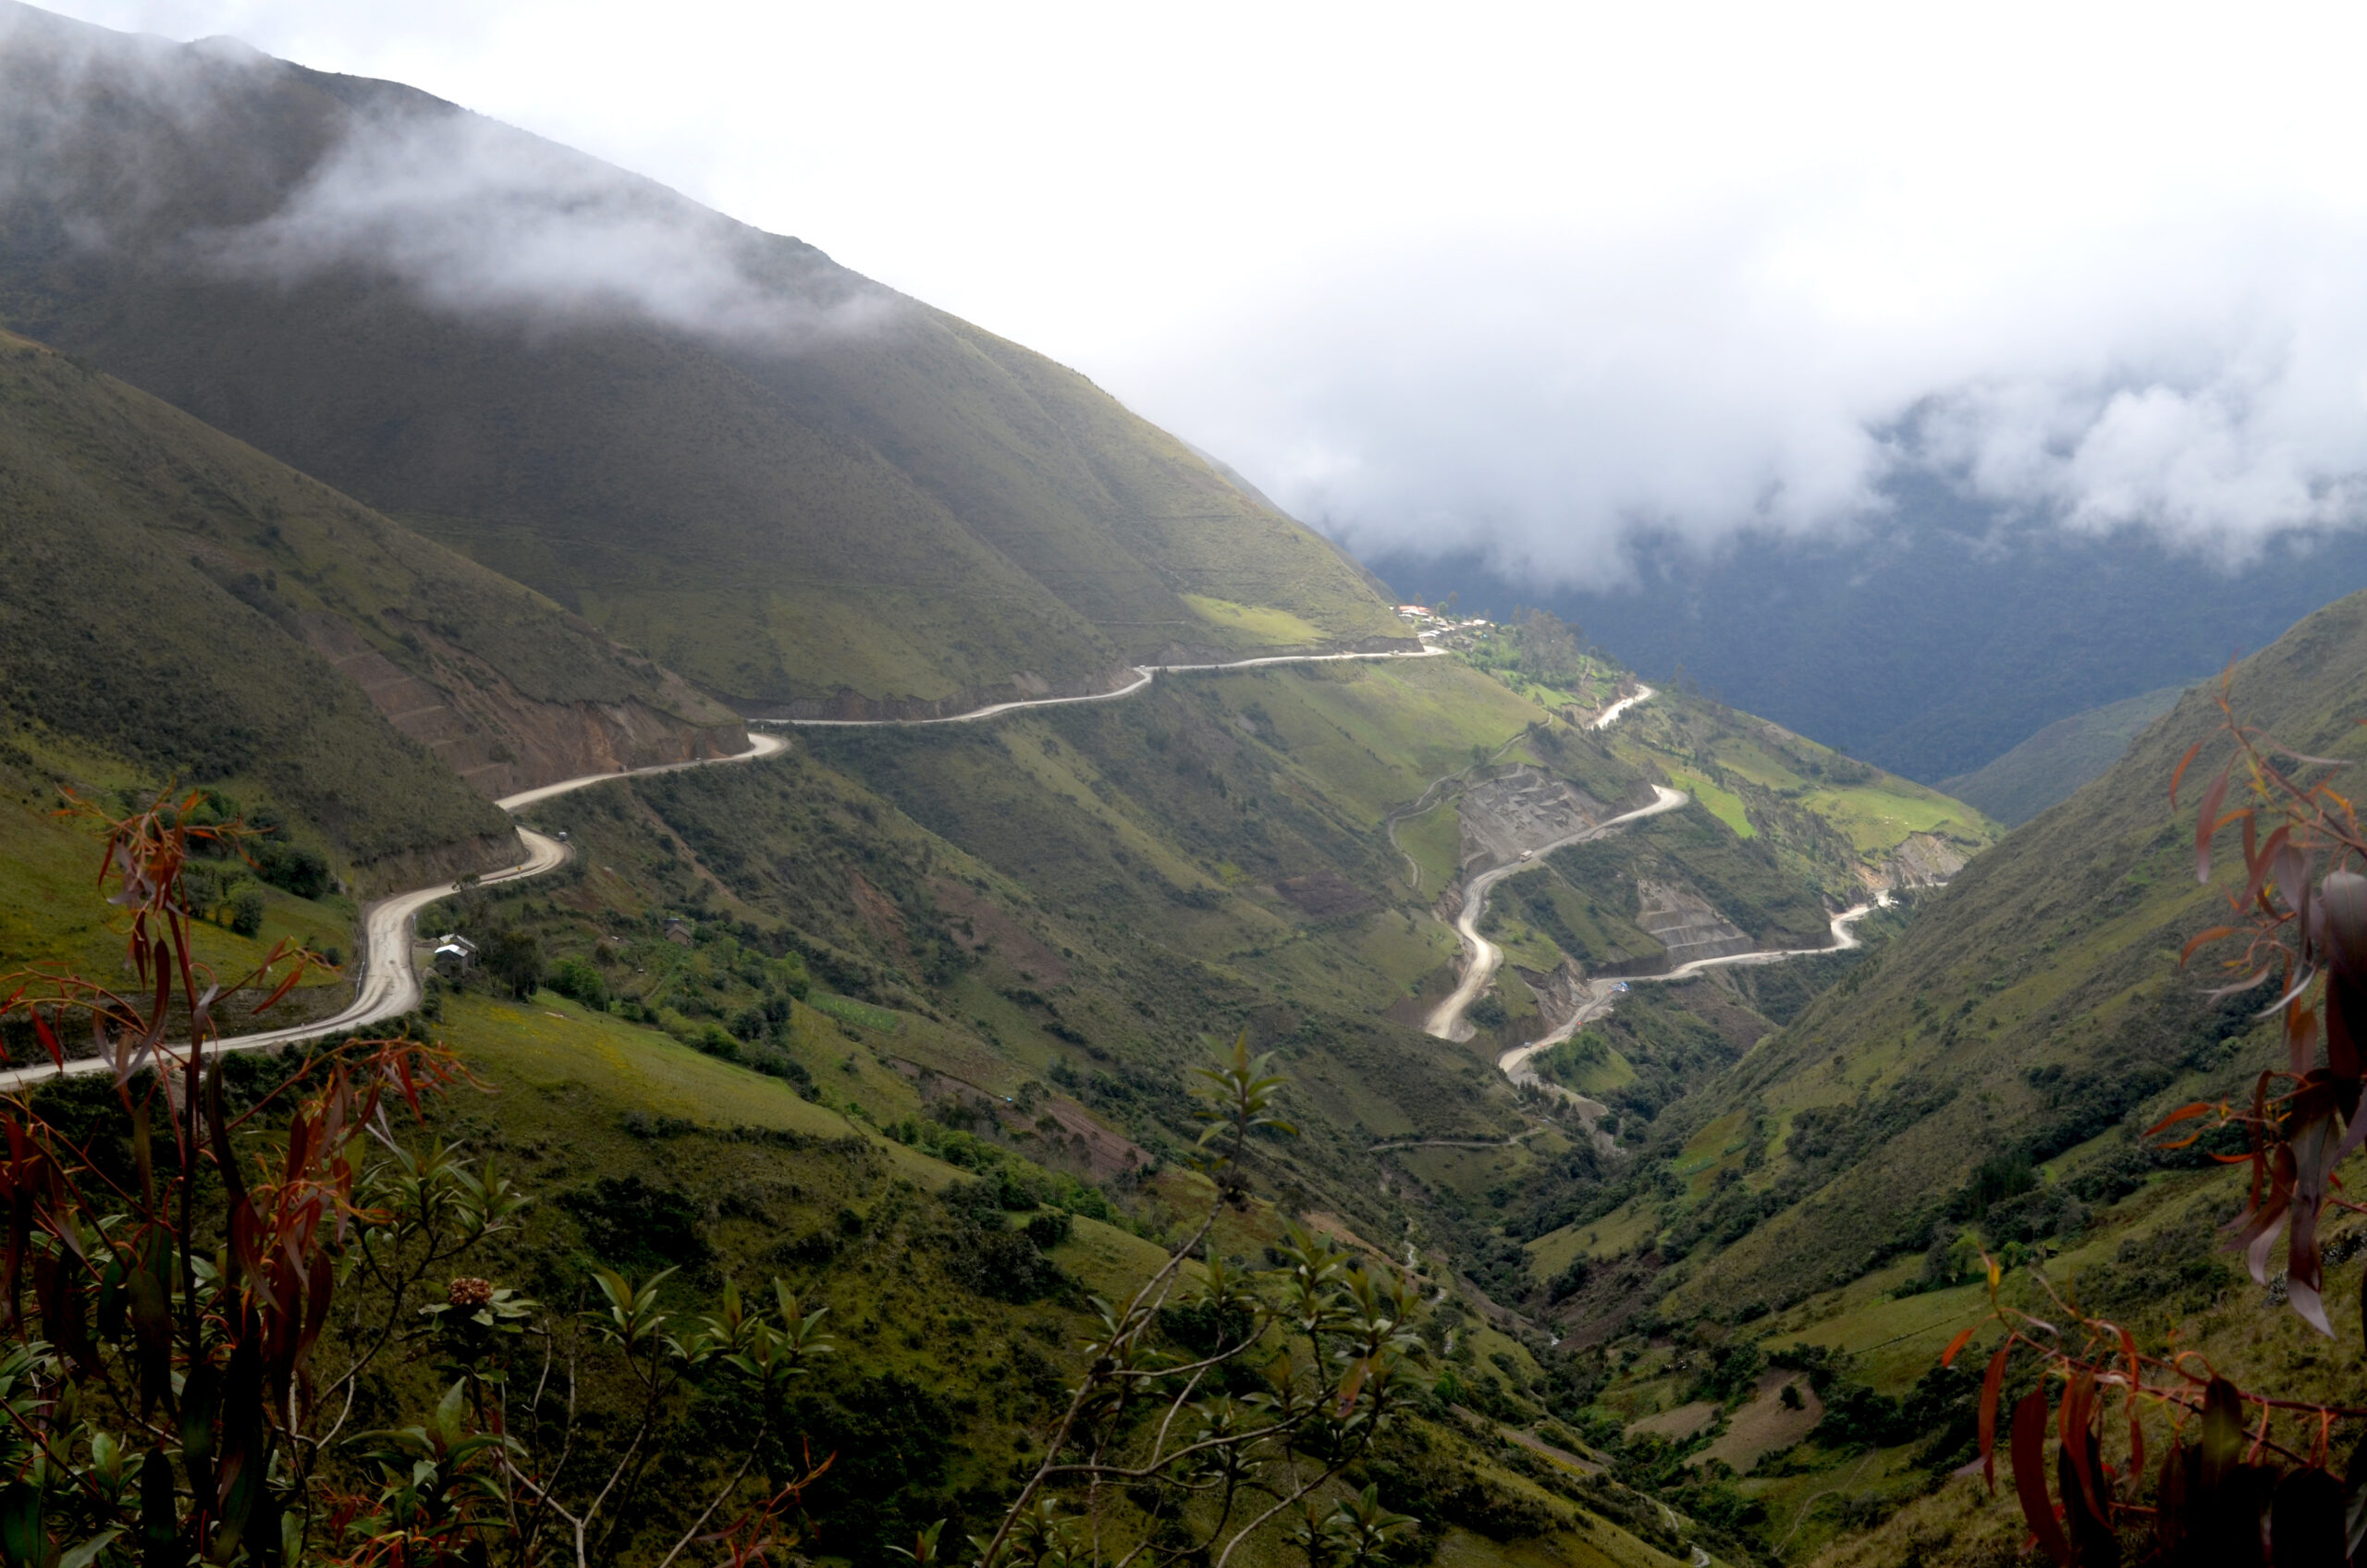 Morelco: Carretera Imperial - Izcuchaca en Huancavelica, Perú